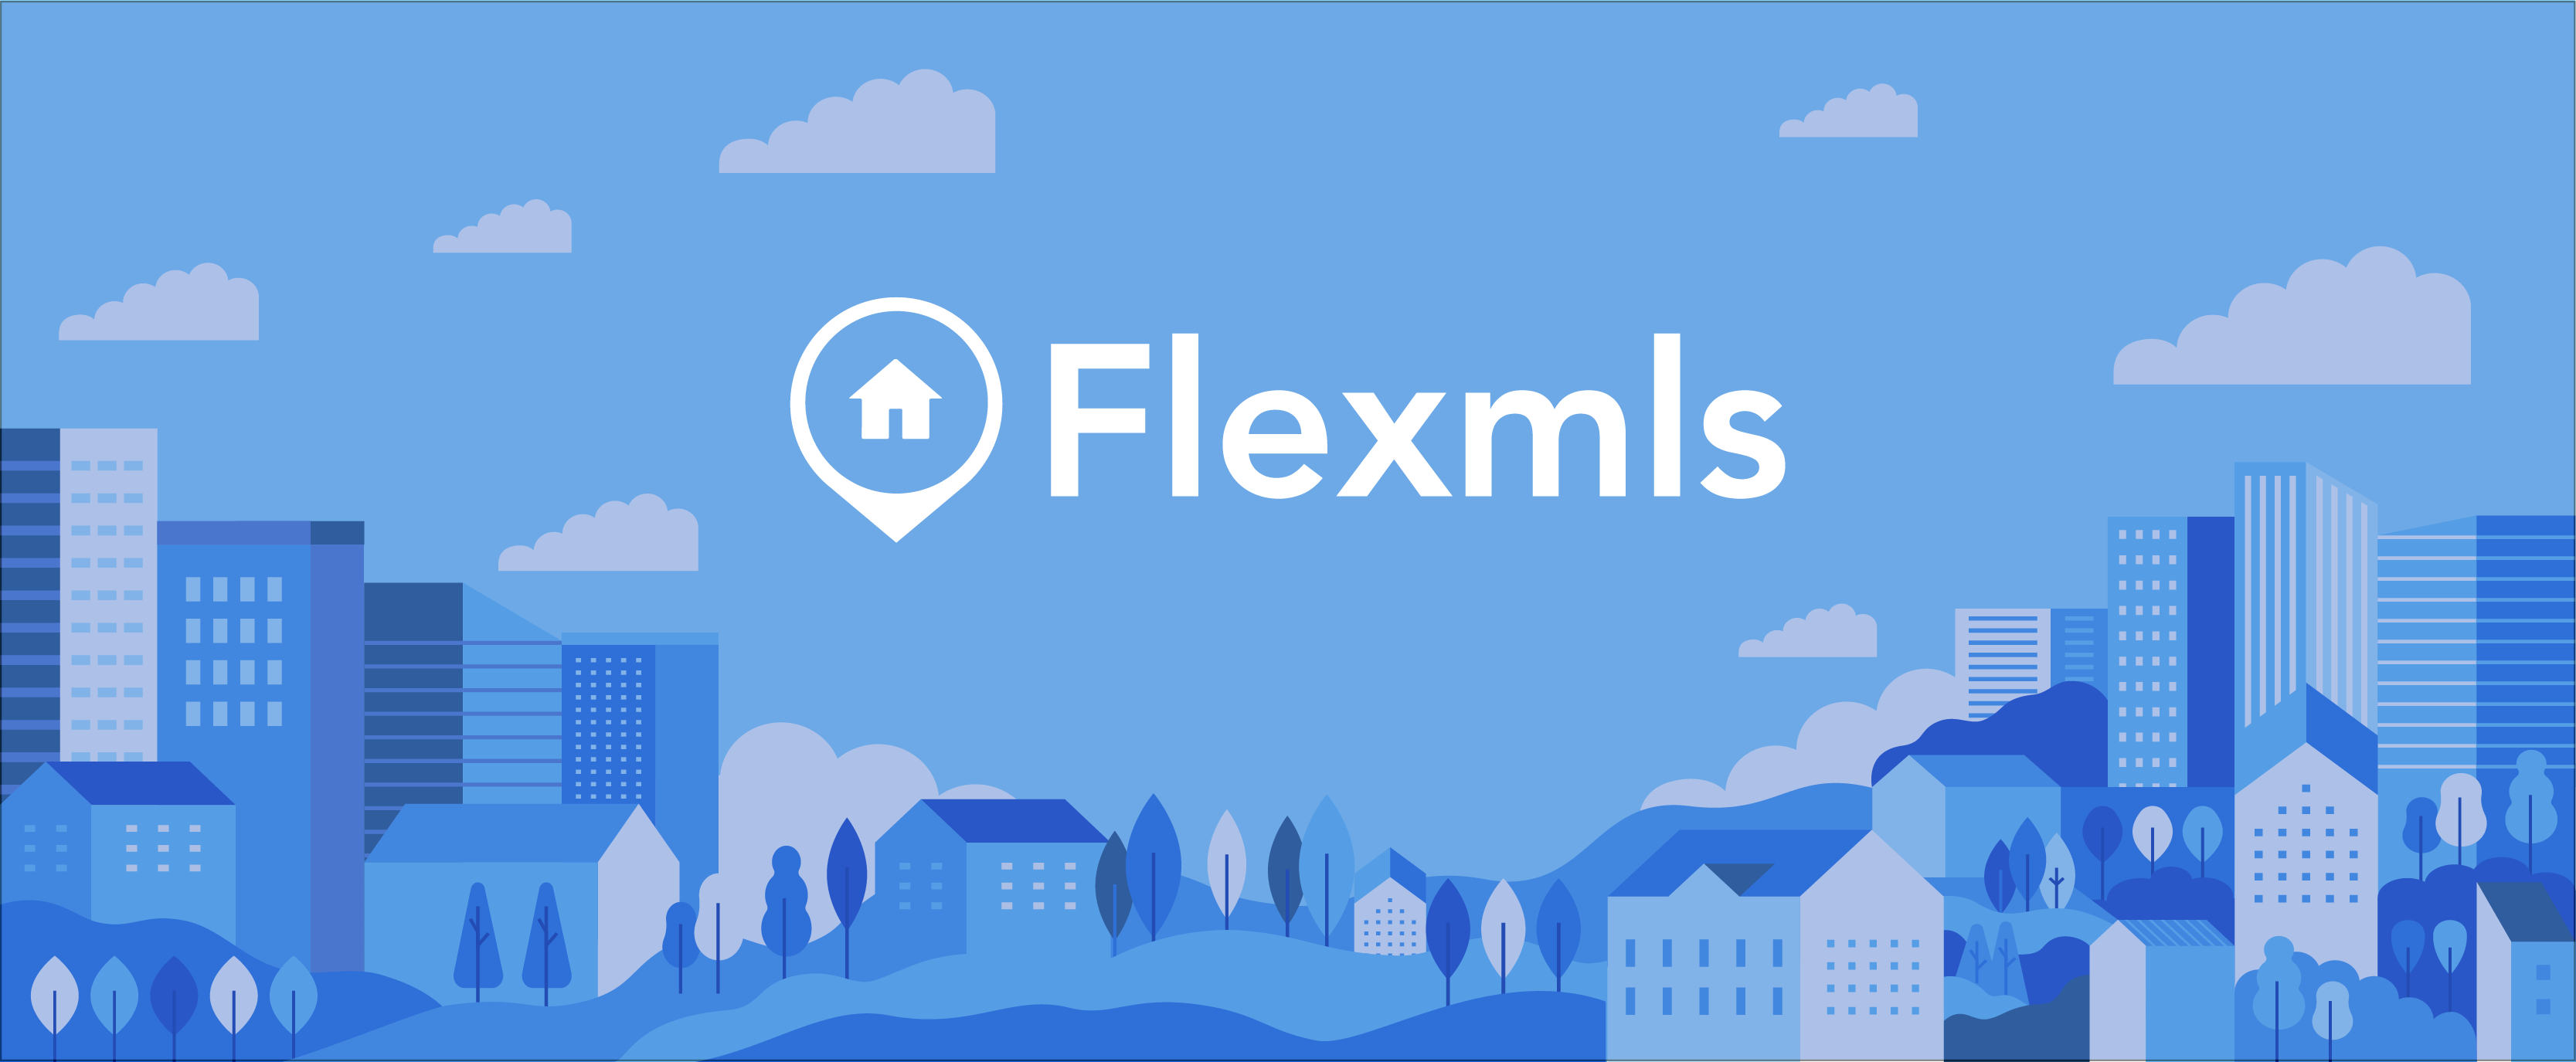 Welcome_to_Flexmls_Header_Image.png